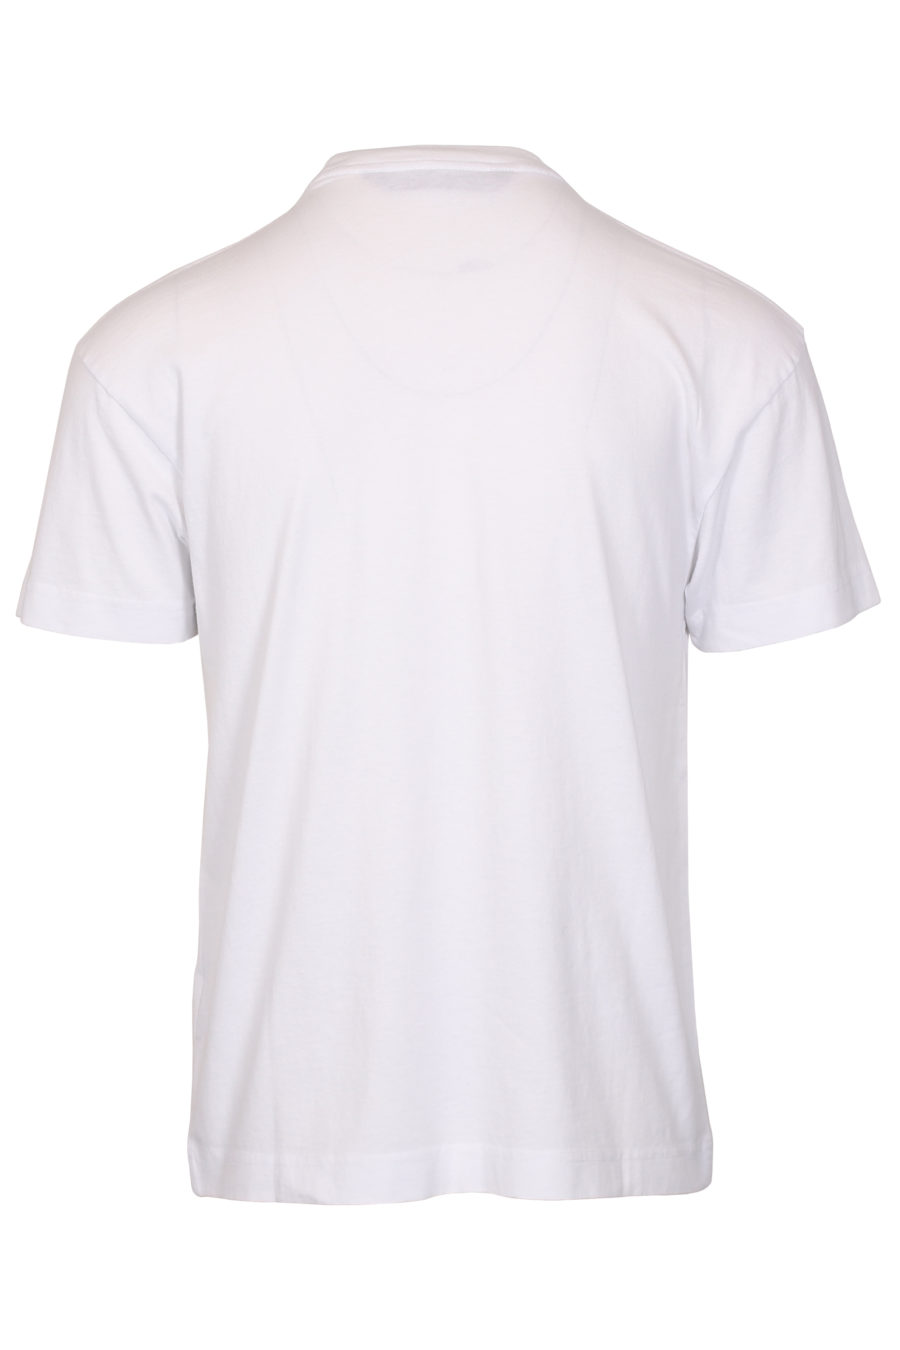 T-shirt blanc avec logo Palm Beach - IMG 1053